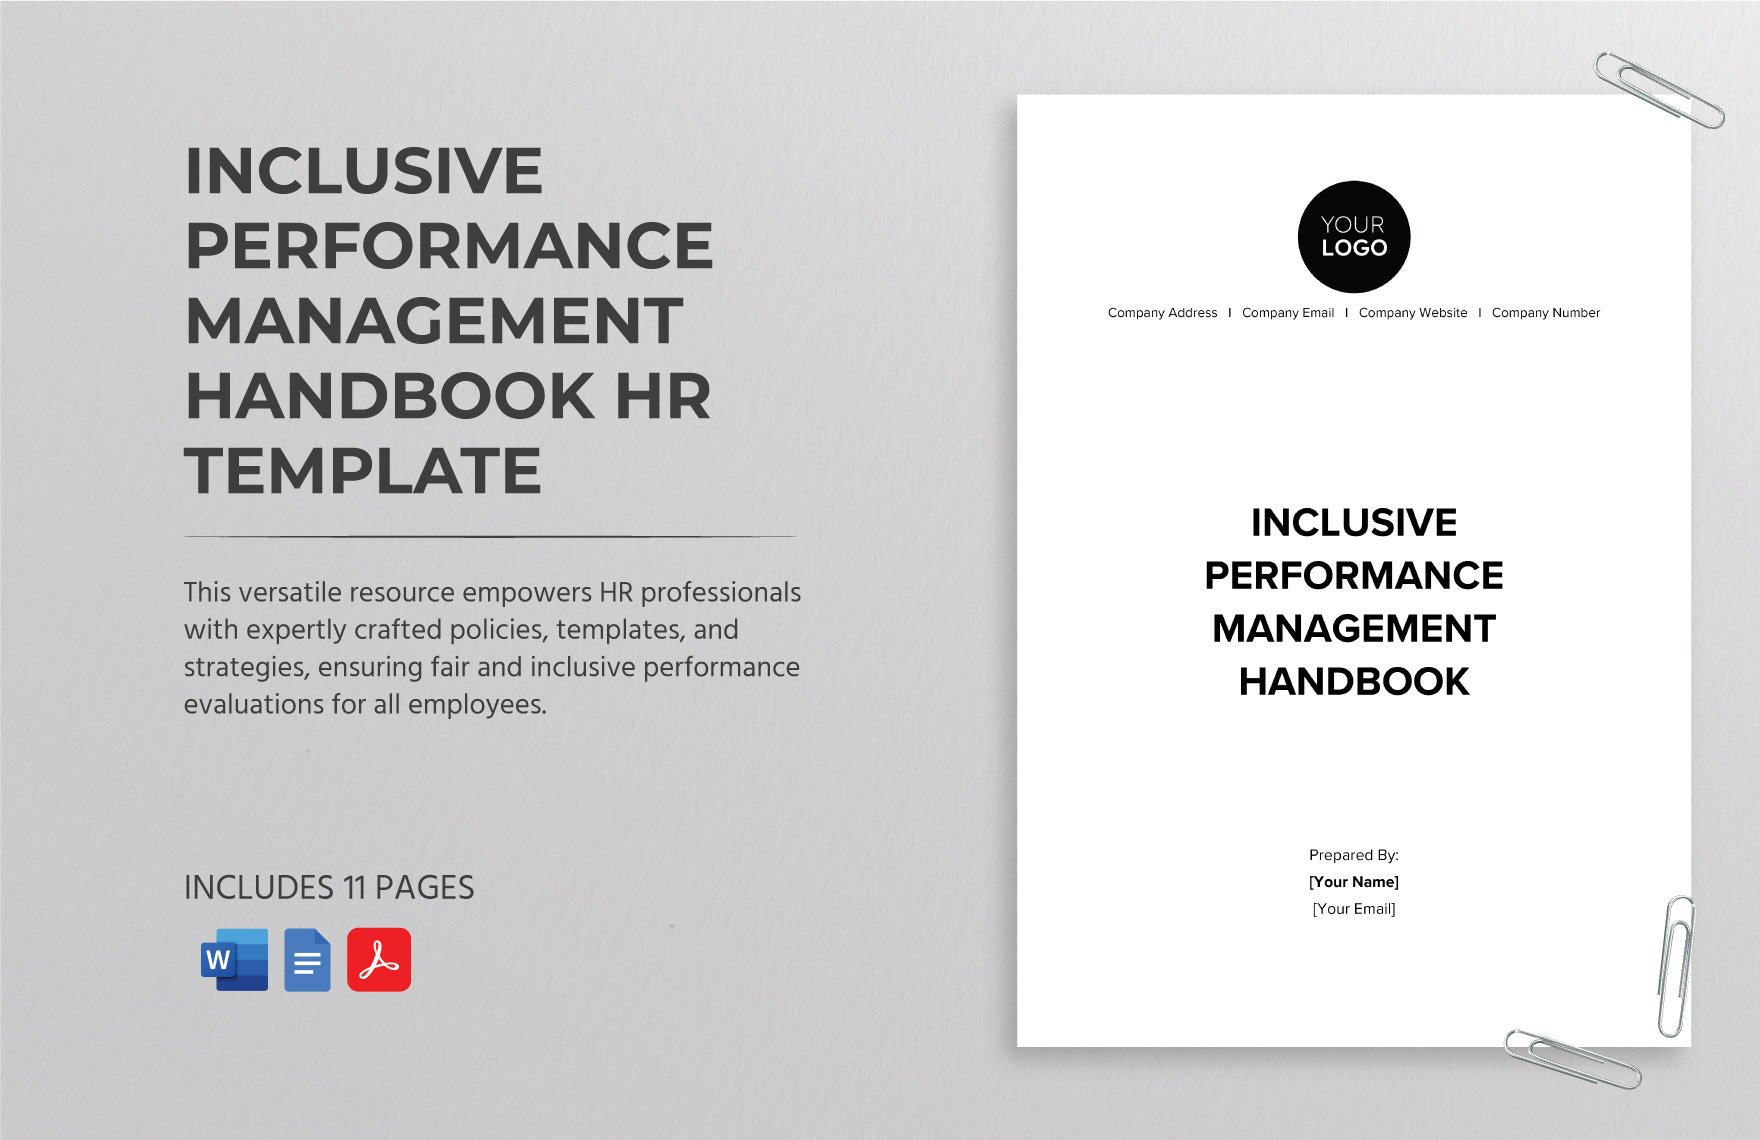 Inclusive Performance Management Handbook HR Template